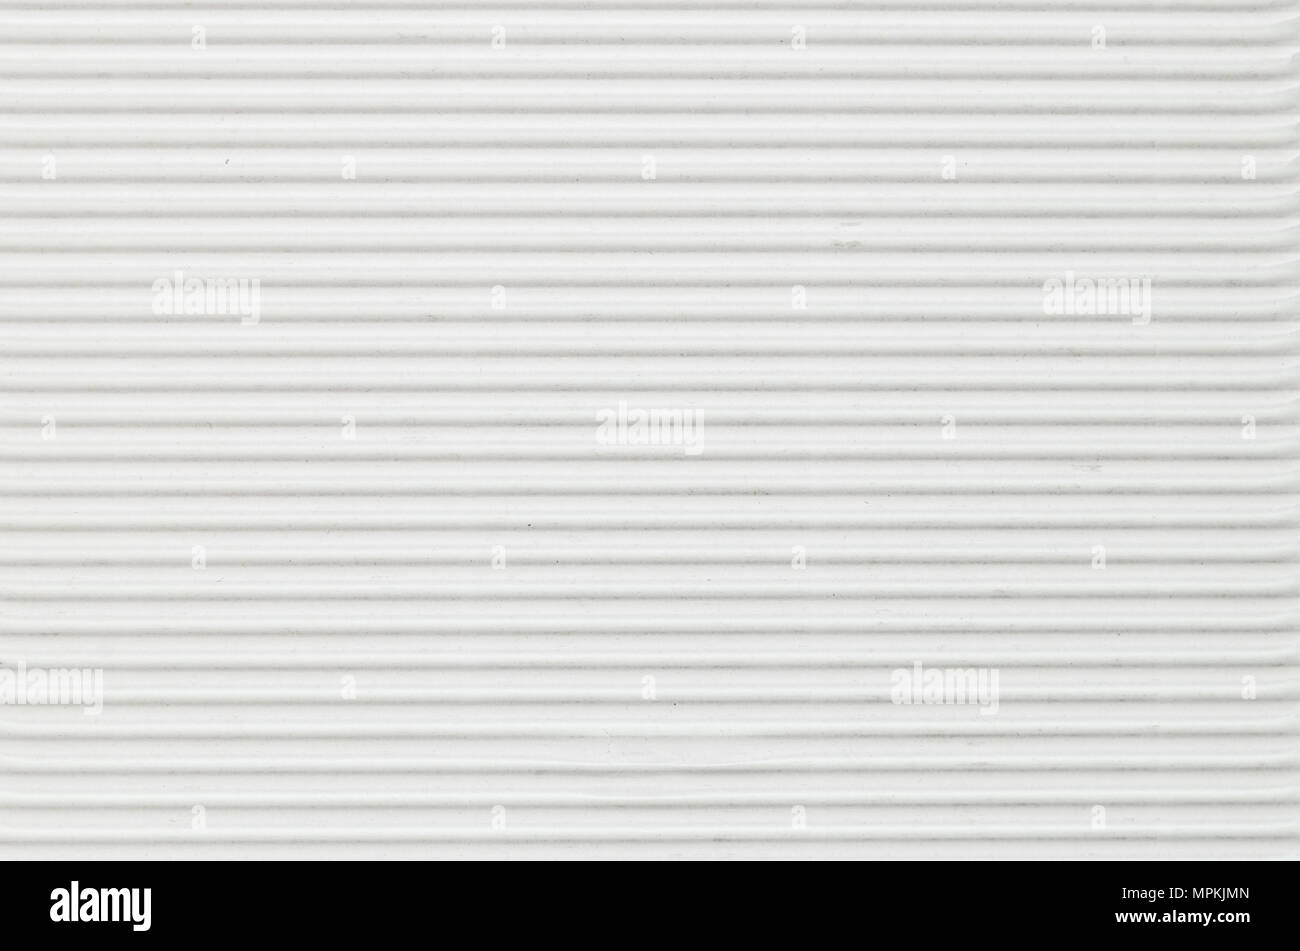 corrugated cardboard surface background Stock Photo - Alamy